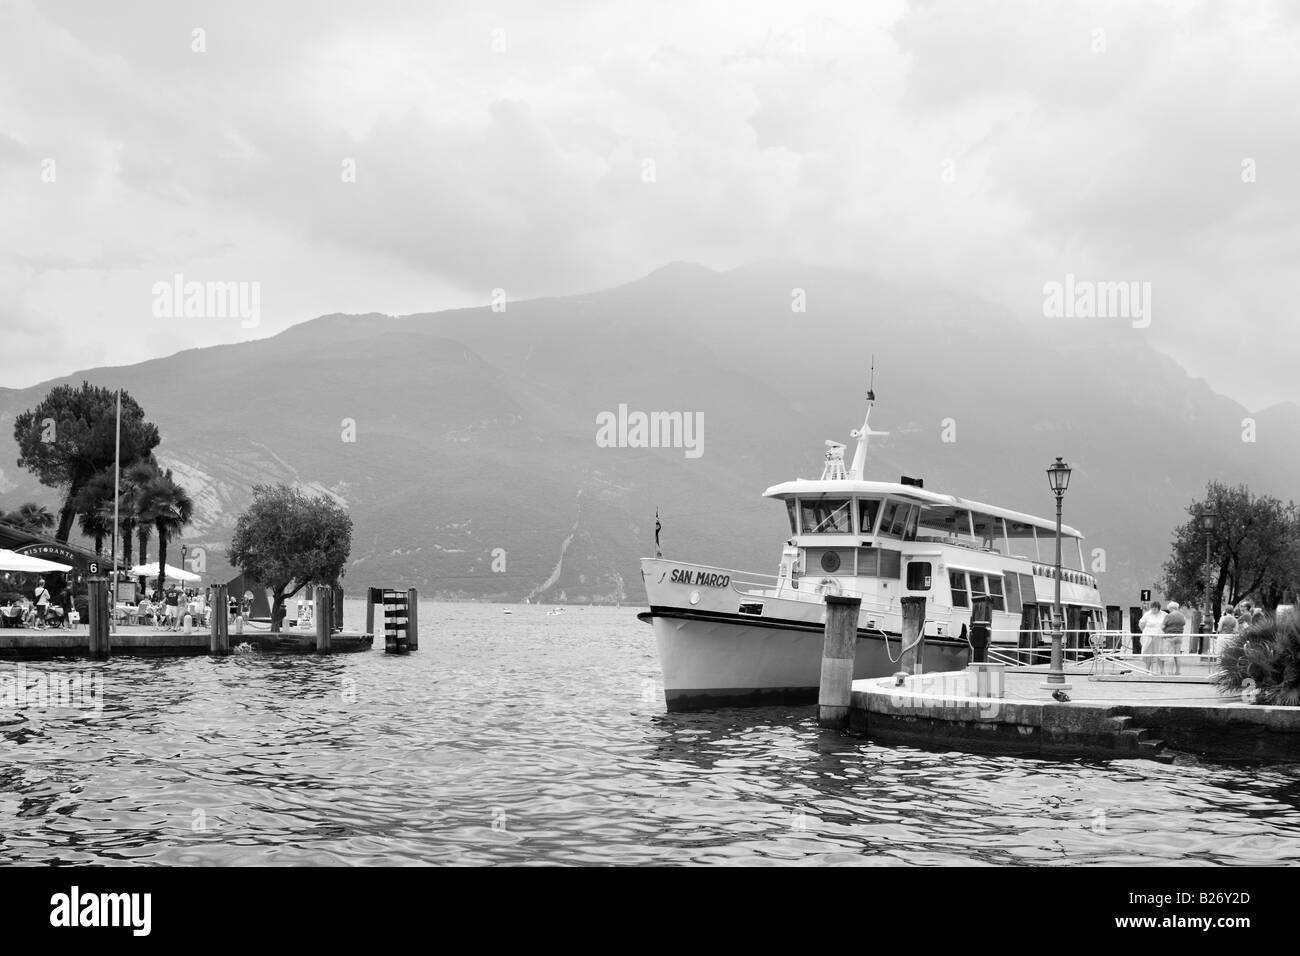 Ferryboat moored at the quayside, Riva del Garda, Lake Garda, Italy Stock Photo